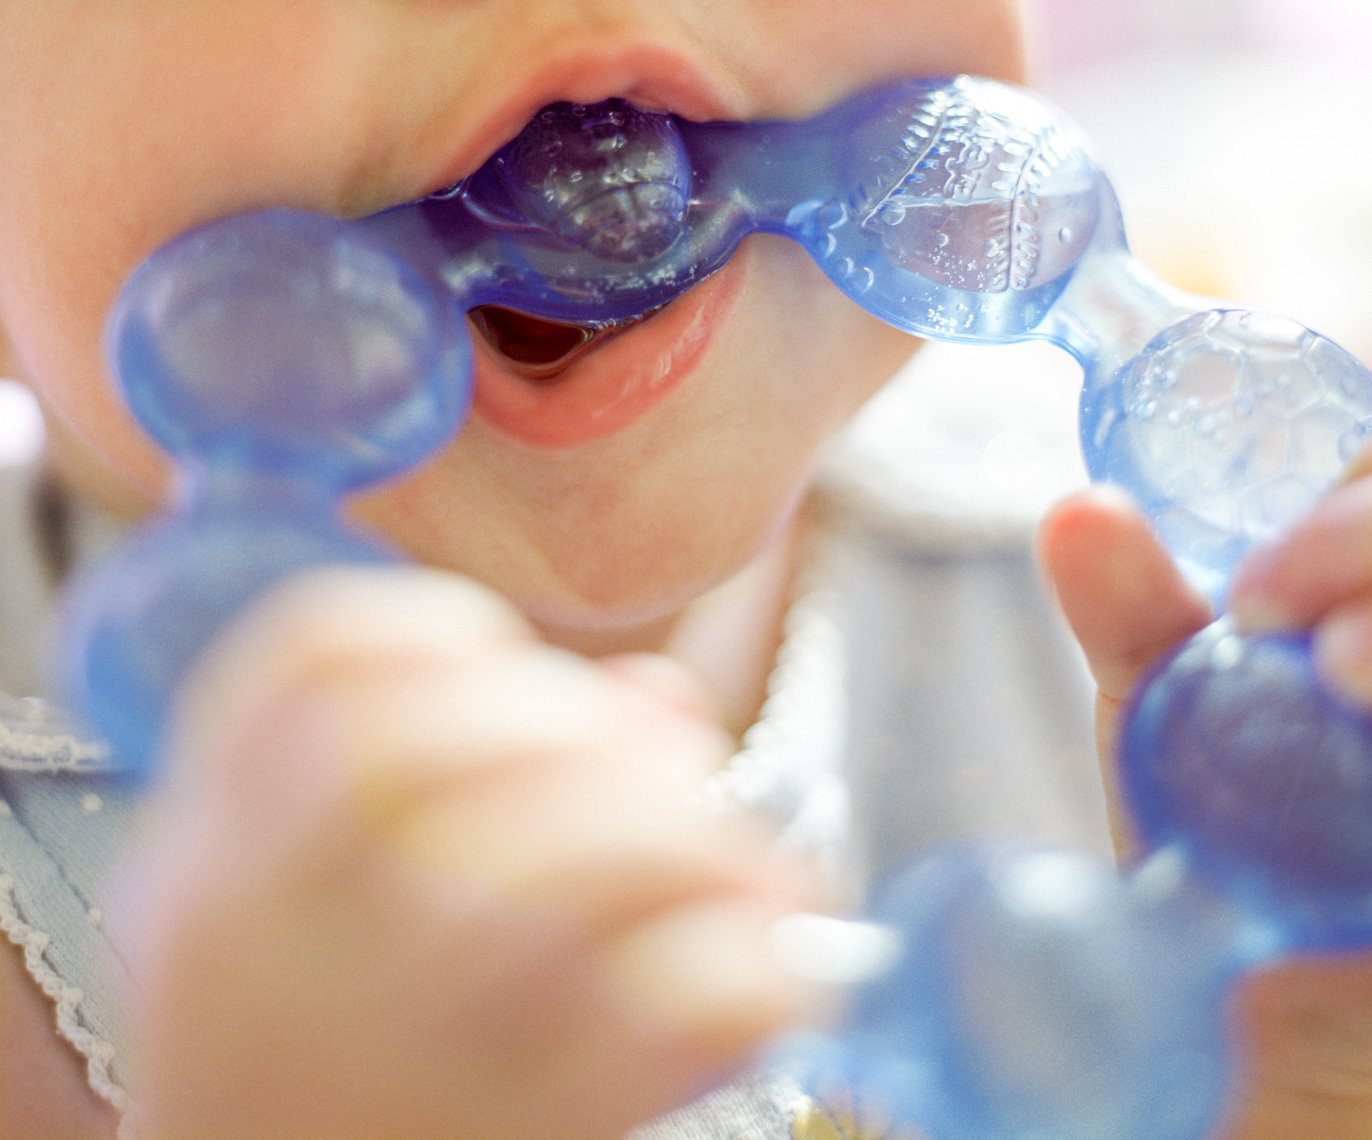 Baby sucking teething ring | Kids Lifestyle Photographer